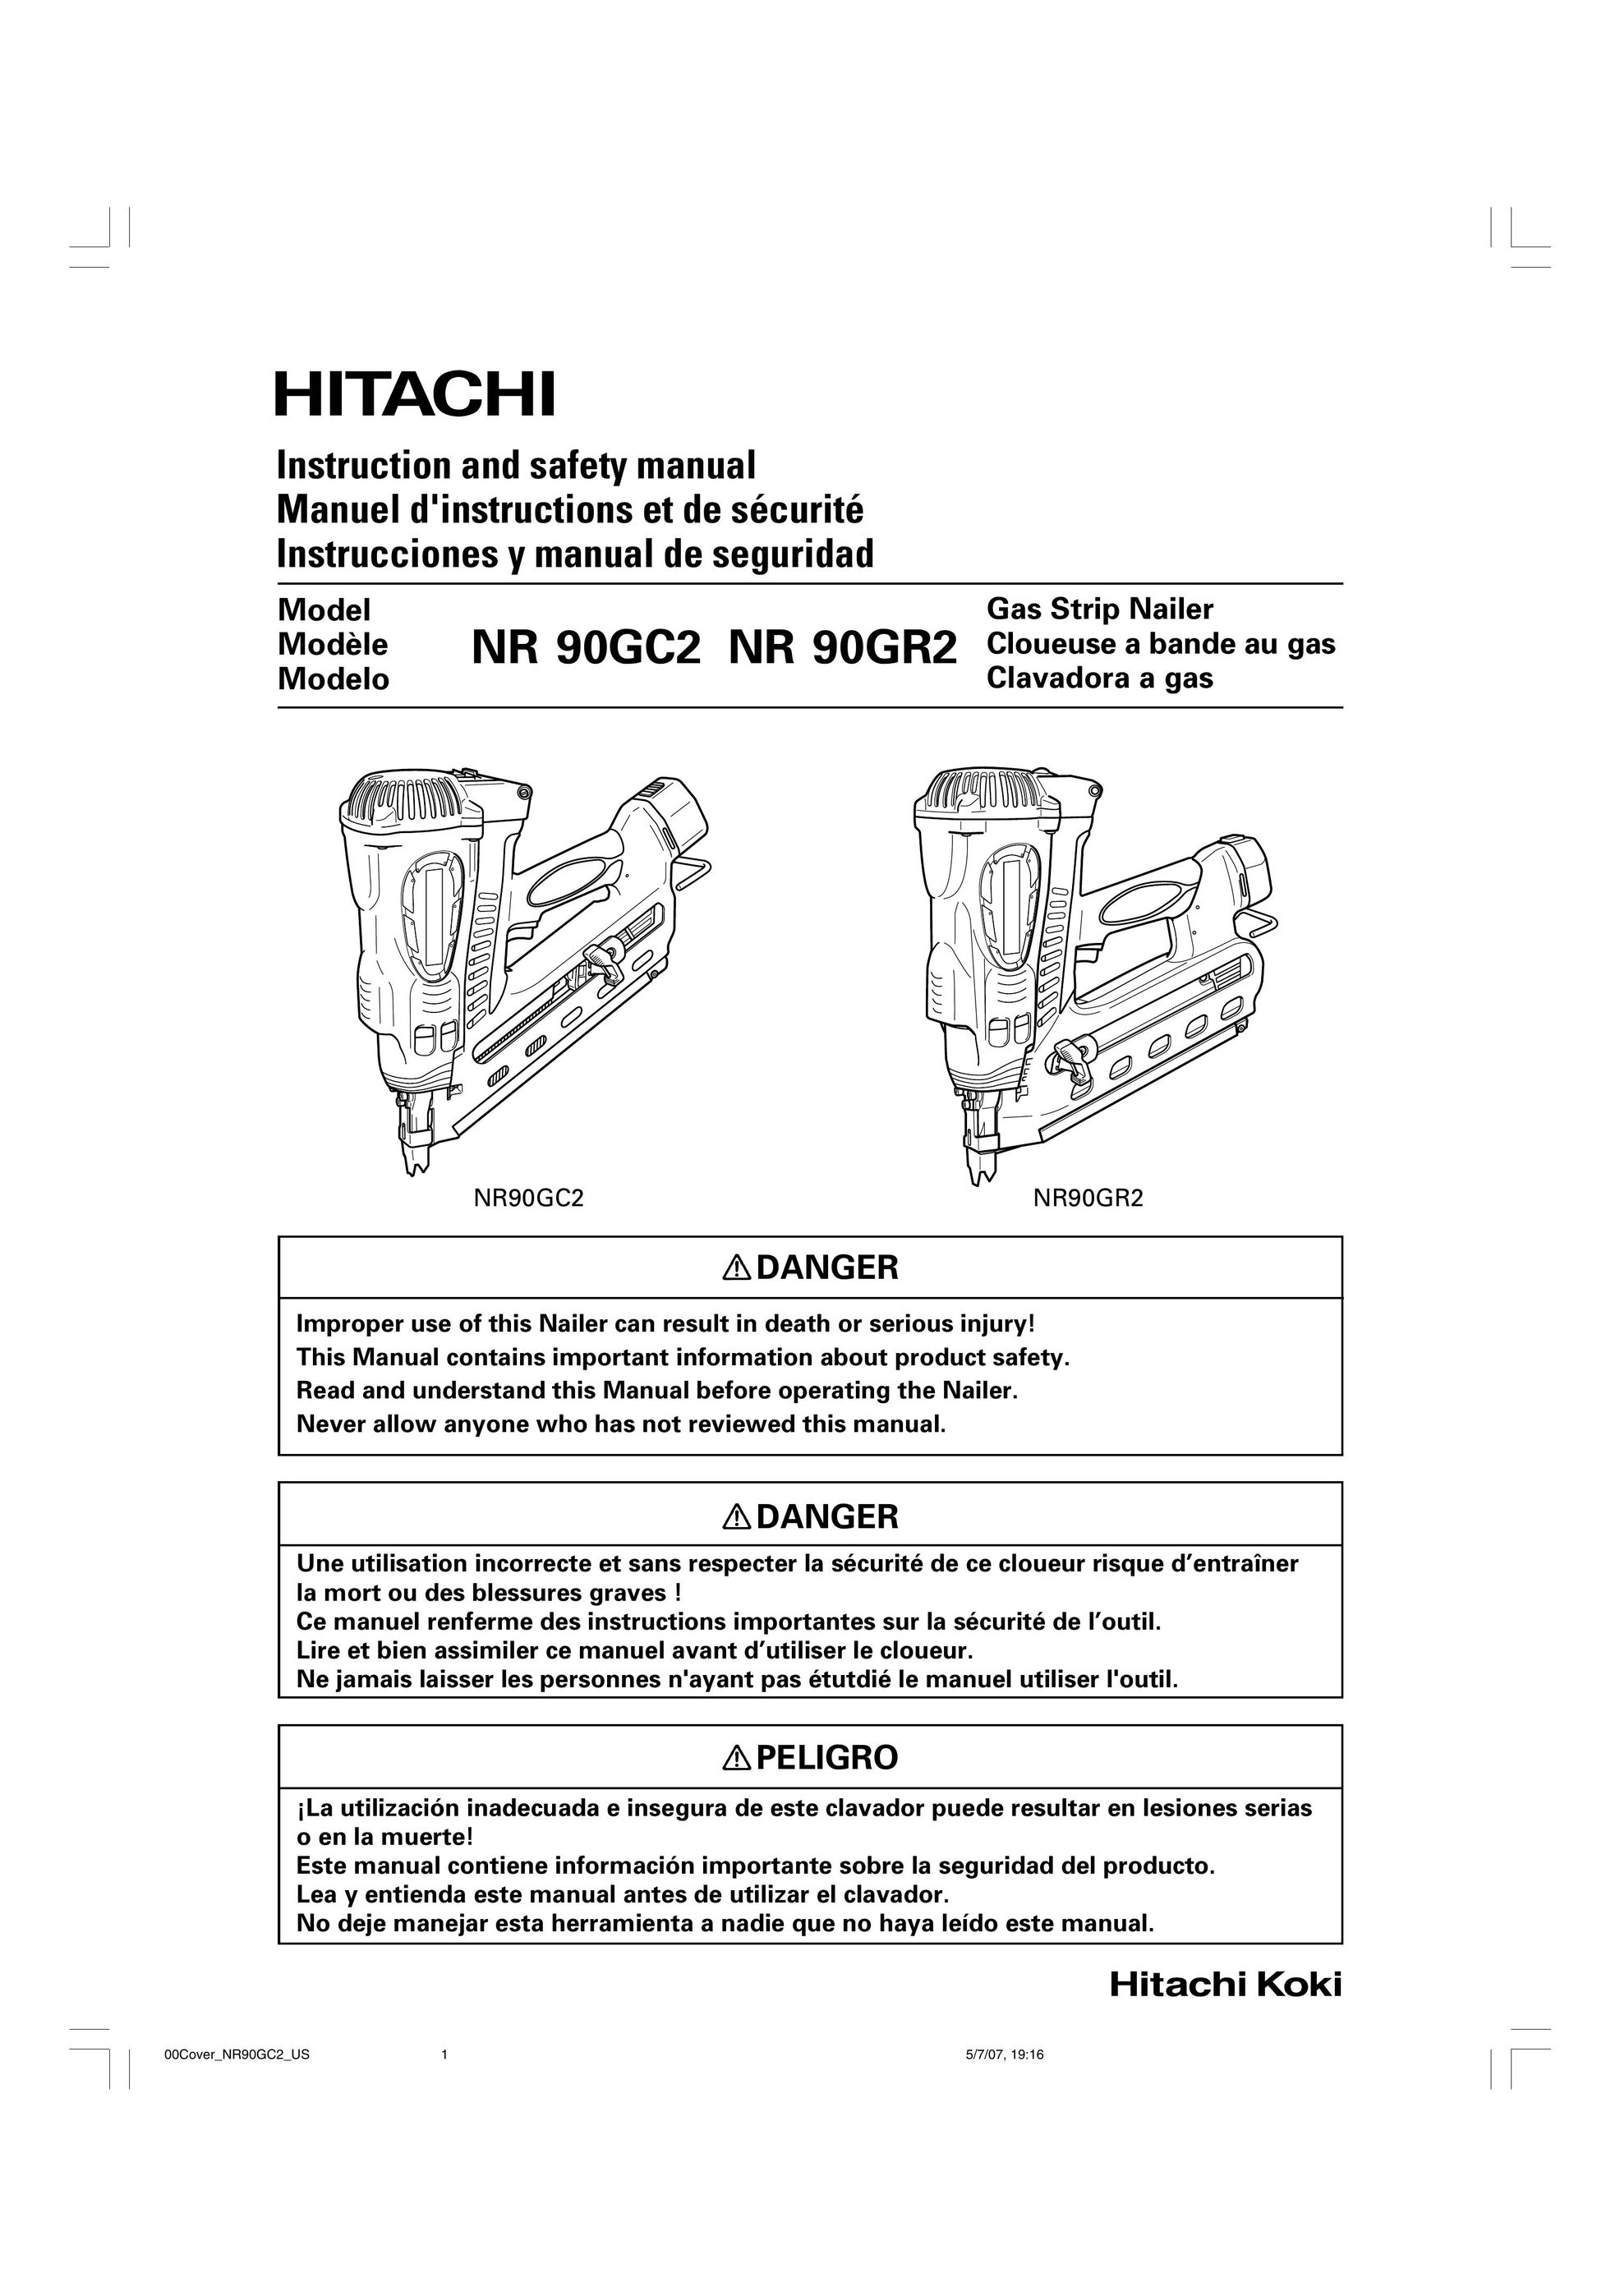 Hitachi NR 90GC2 Nail Gun User Manual